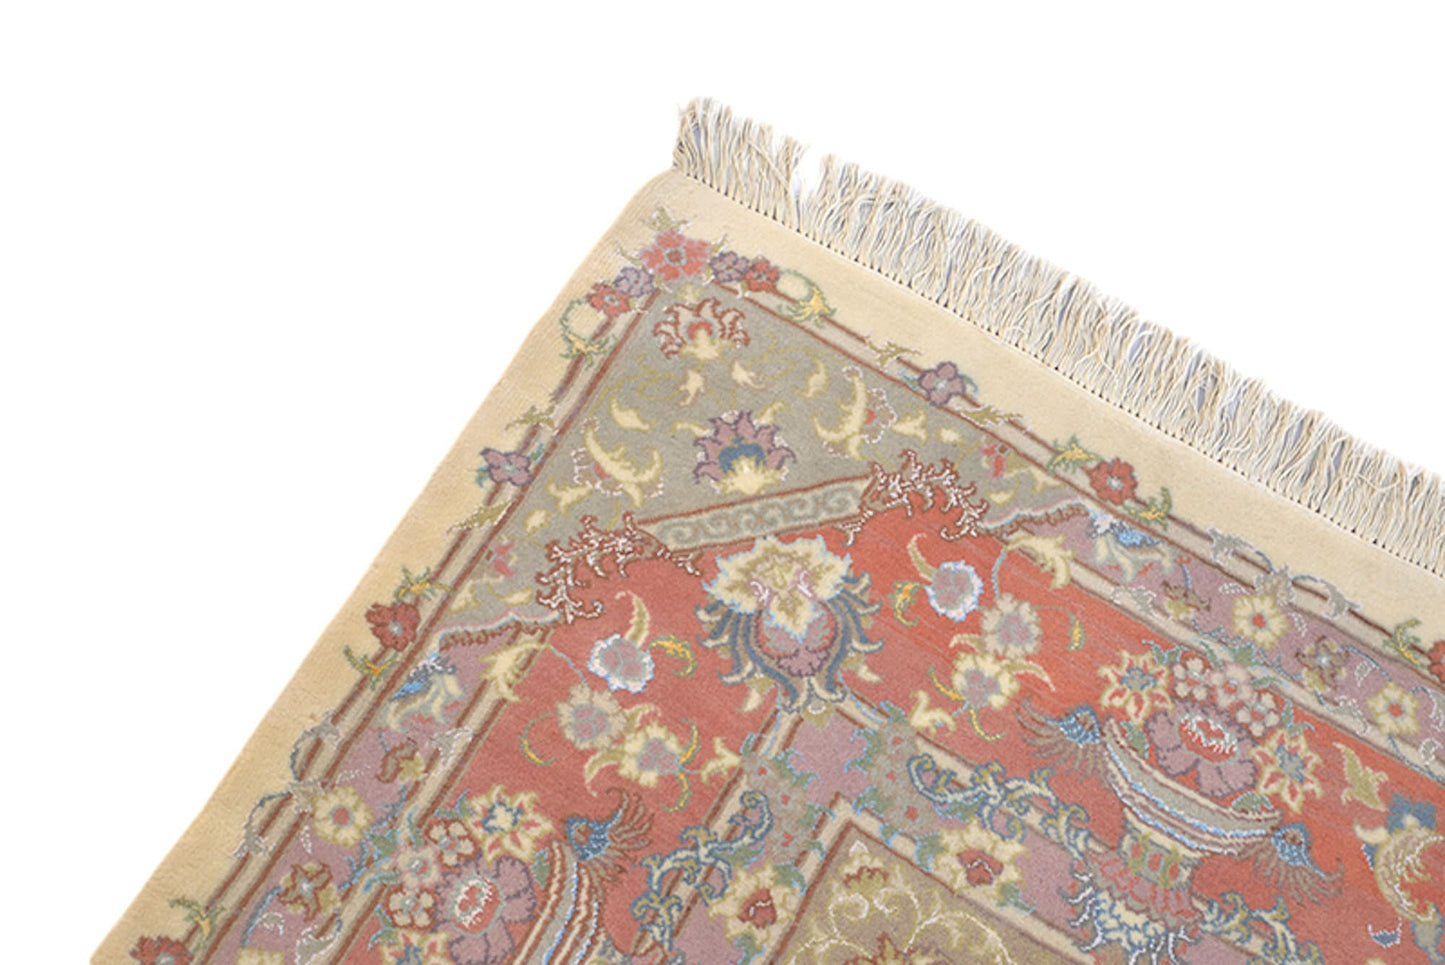 7 x 10 Feet Colorful Floral Rug | Handmade Area Rug | Oriental Persian Rug | Living Room Rug | Wool Traditional Vintage